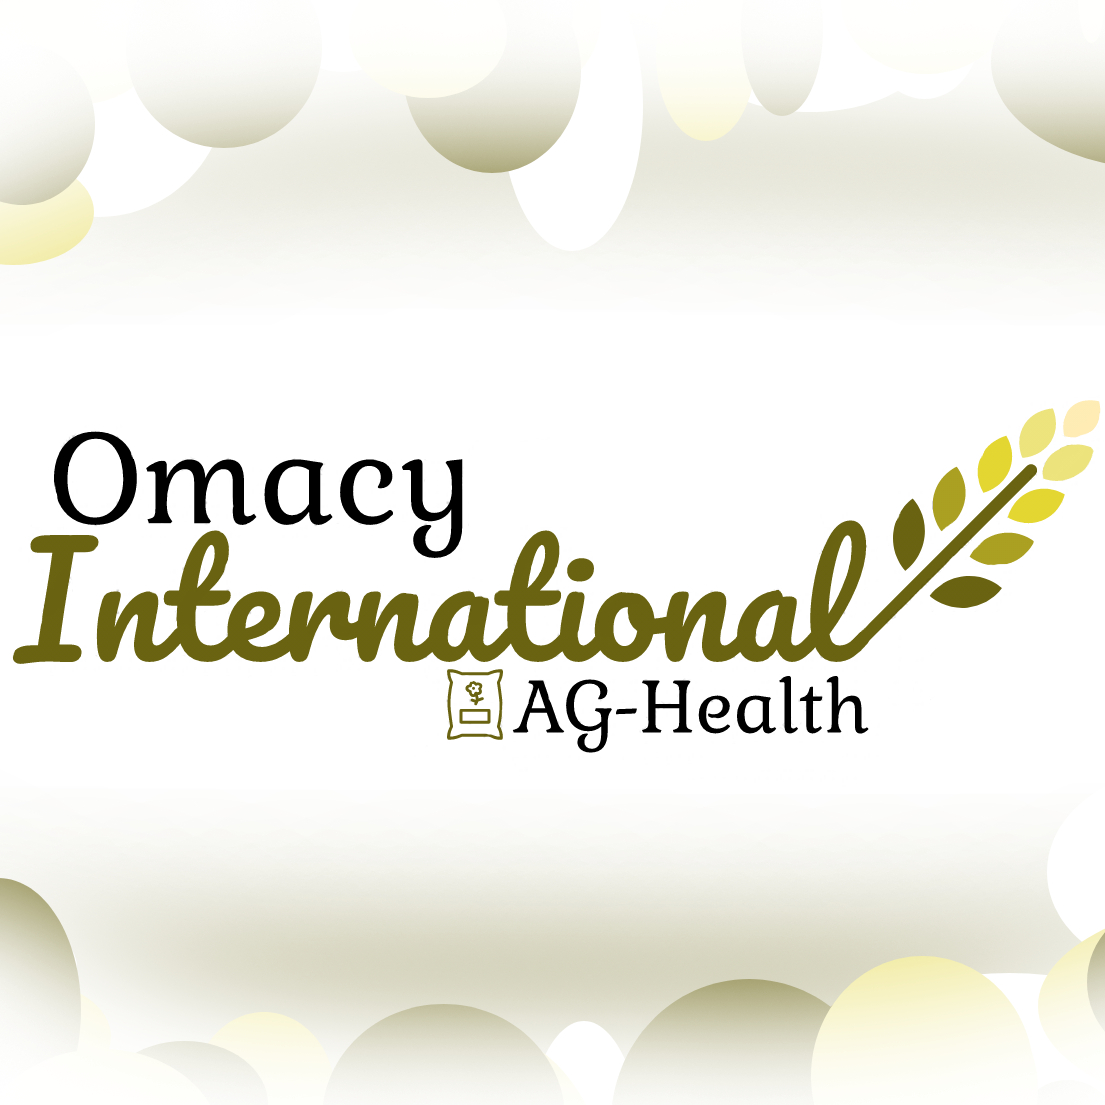 Omacy International AG-Health